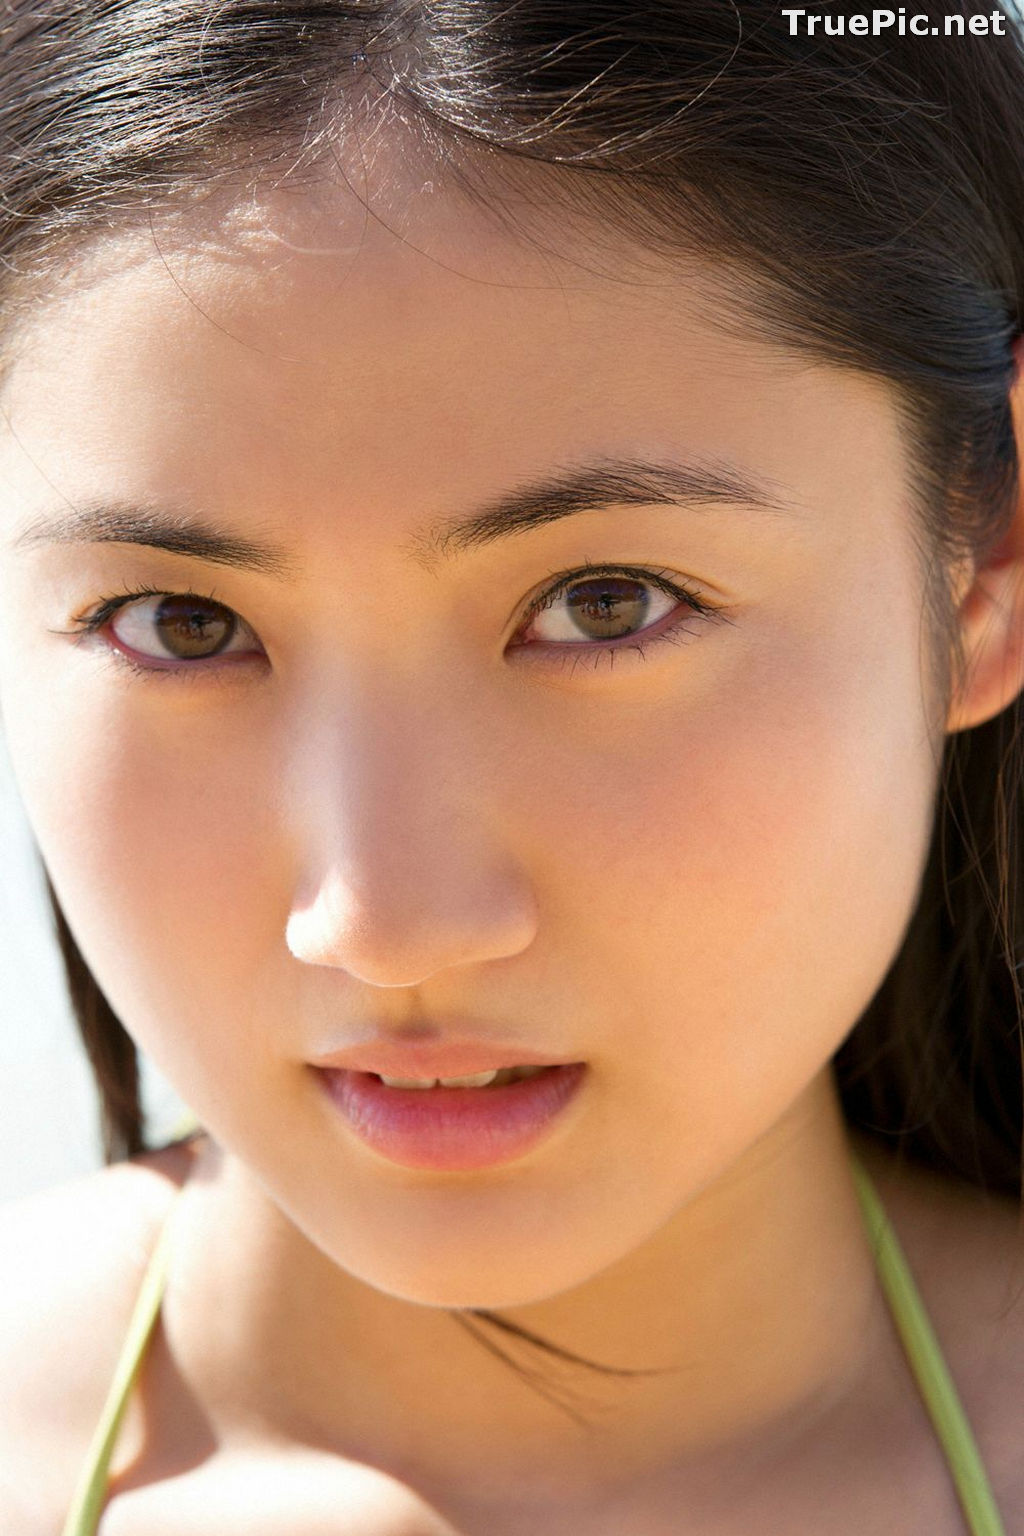 Ys Web Vol429 Japanese Actress And Gravure Idol Irie Saaya